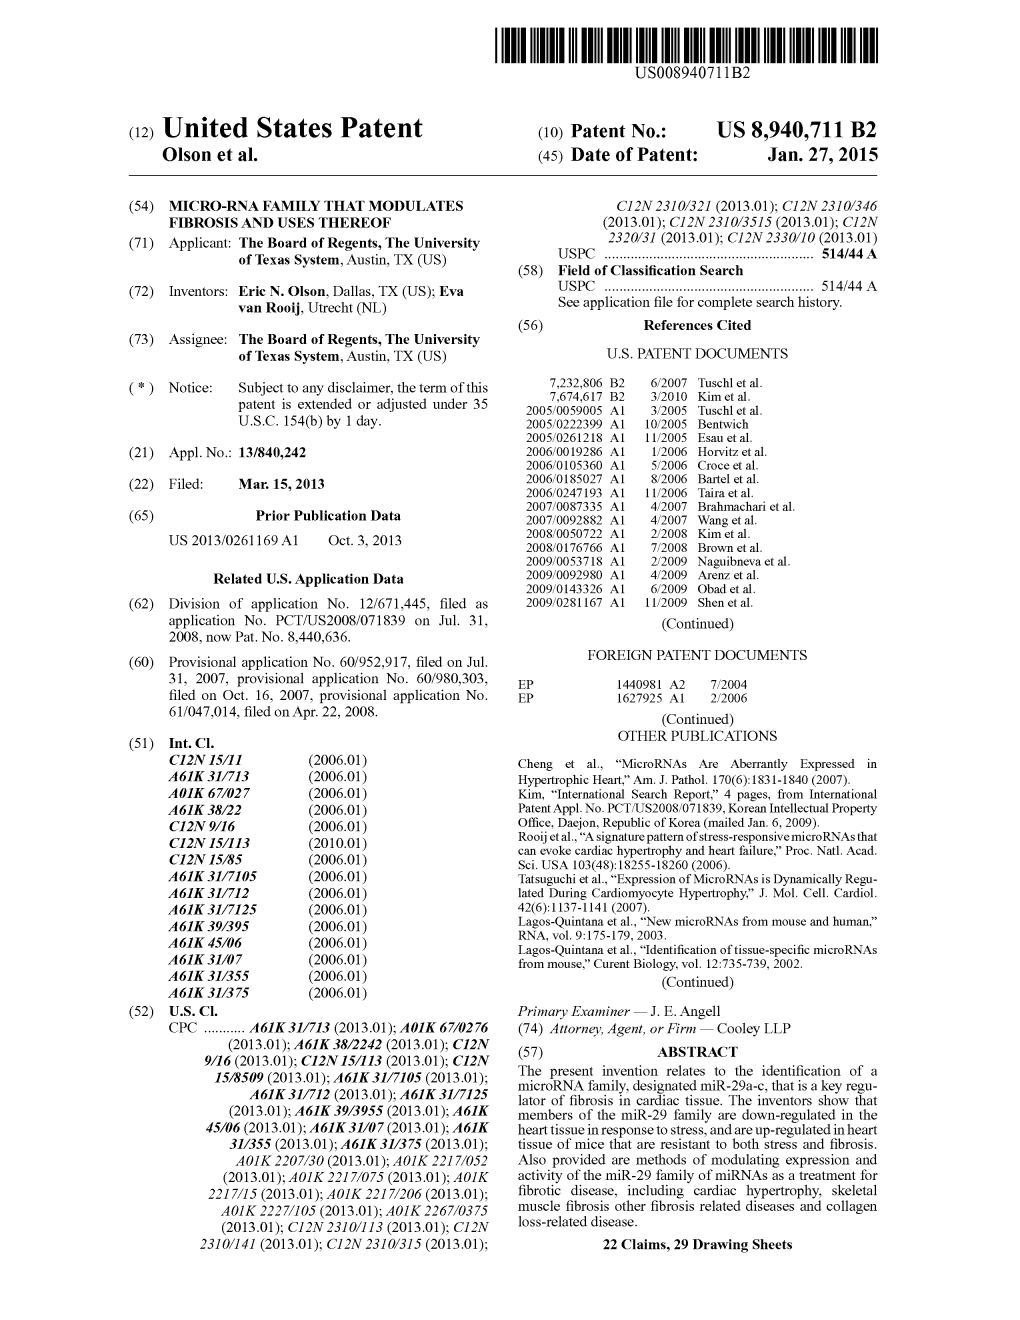 A2) United States Patent (10) Patent No.: US 8,940,711 B2 Olsonet Al